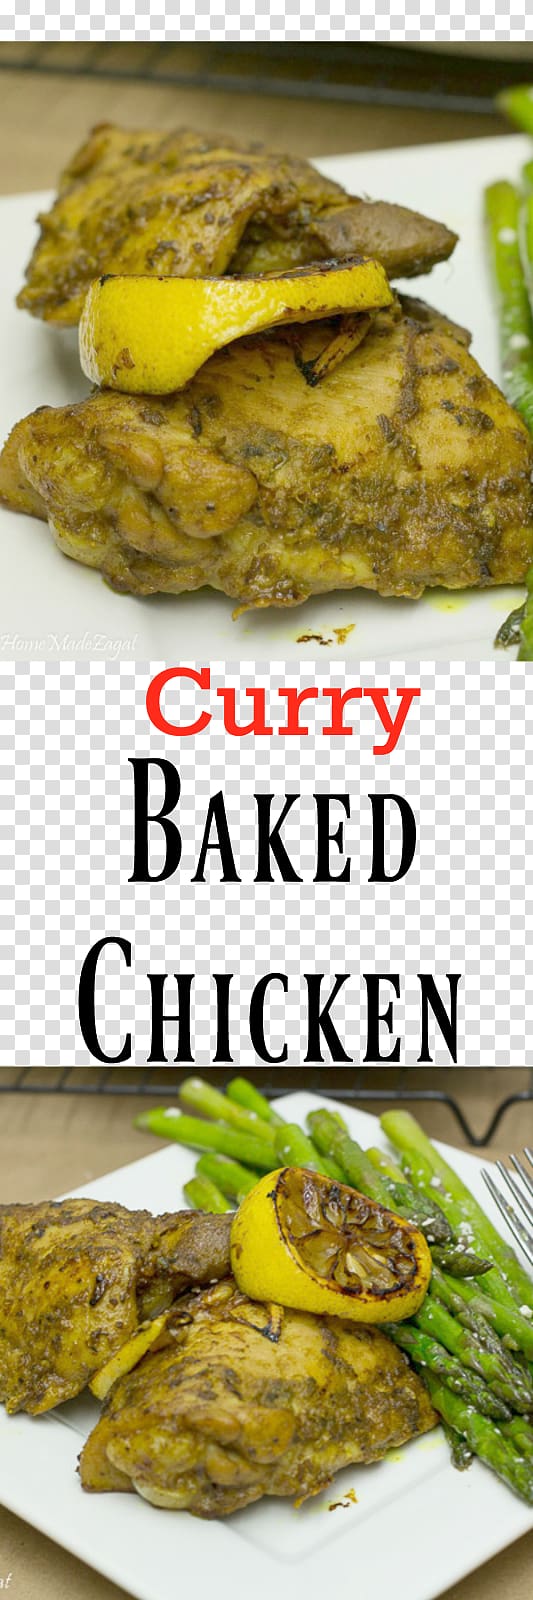 Caribbean cuisine Chicken mull Recipe Roast chicken Chicken curry, baked chicken transparent background PNG clipart